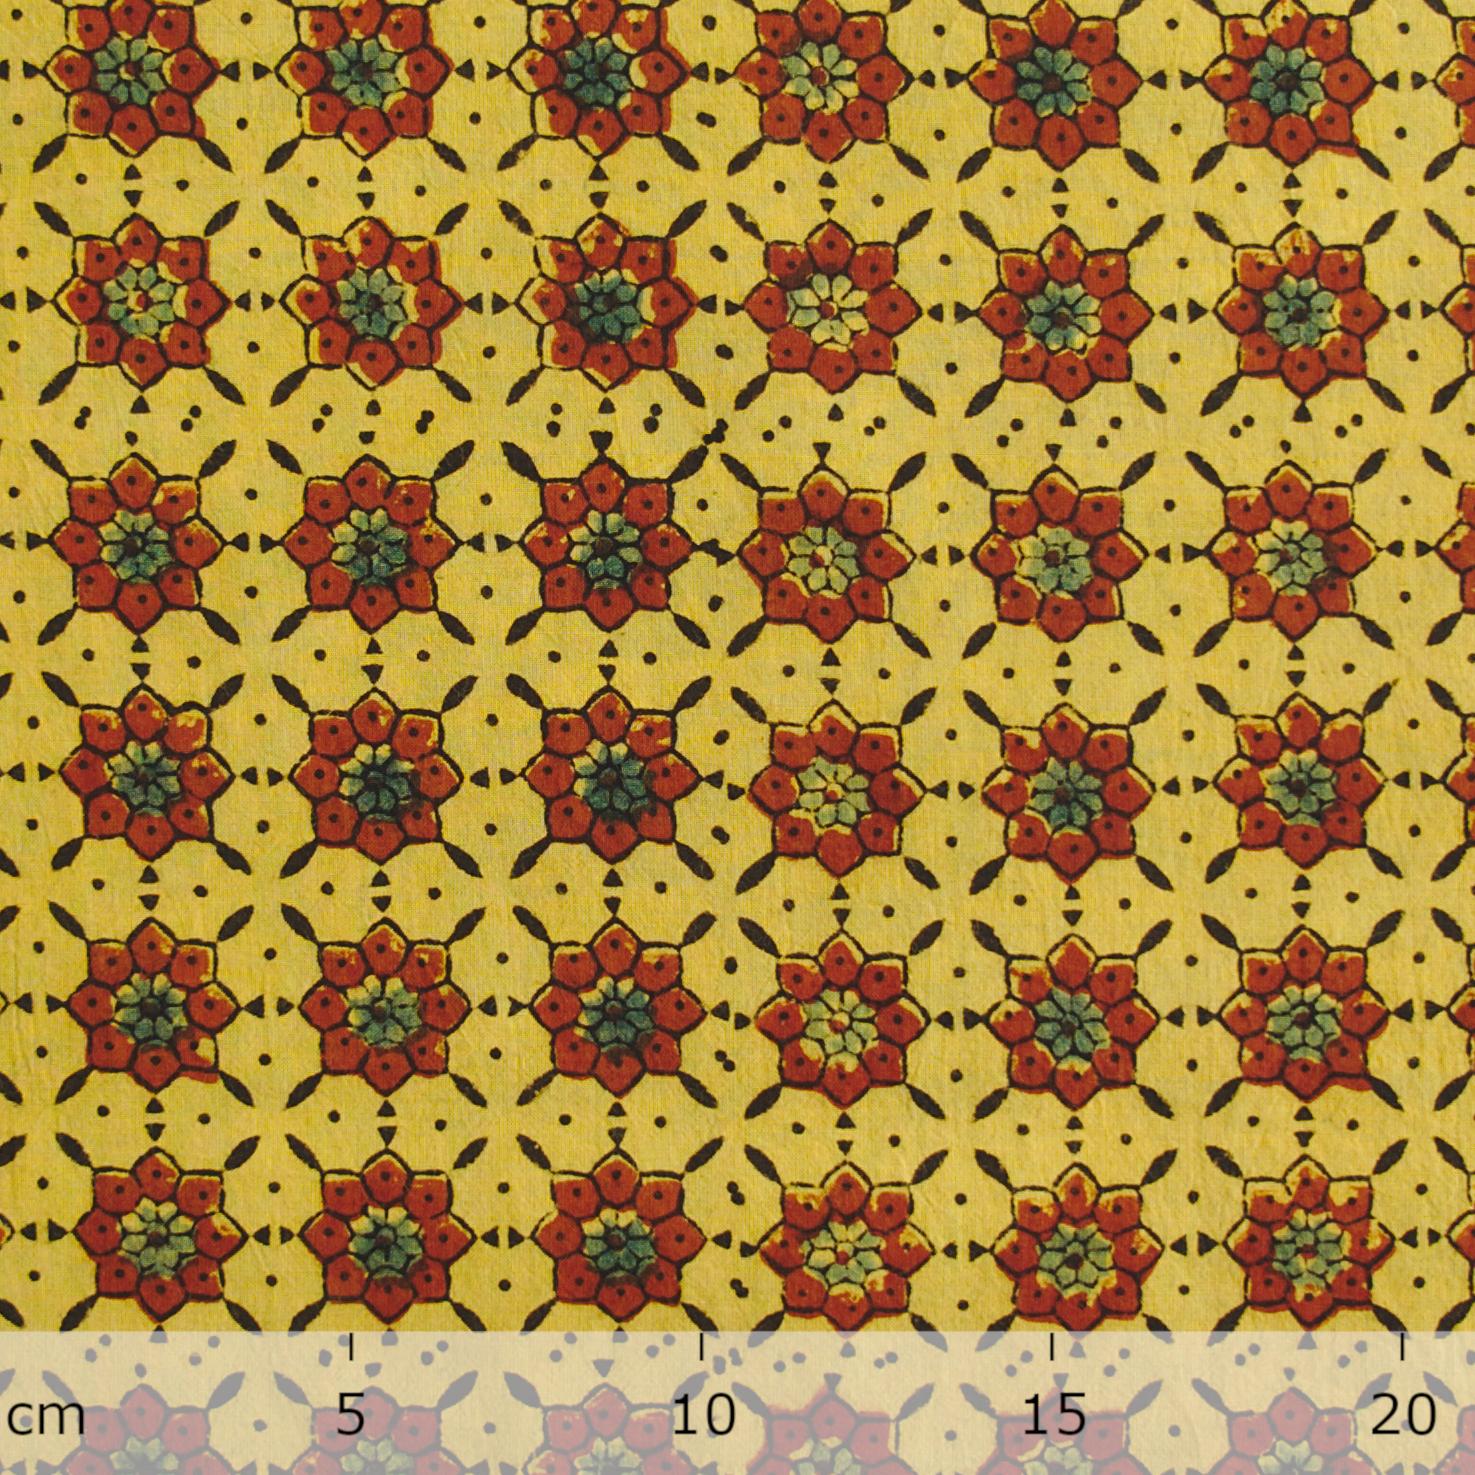 100% Printed Cotton - Starburst Print - Turmeric Yellow, Alizarin Red, Black, Indigo - Ruler